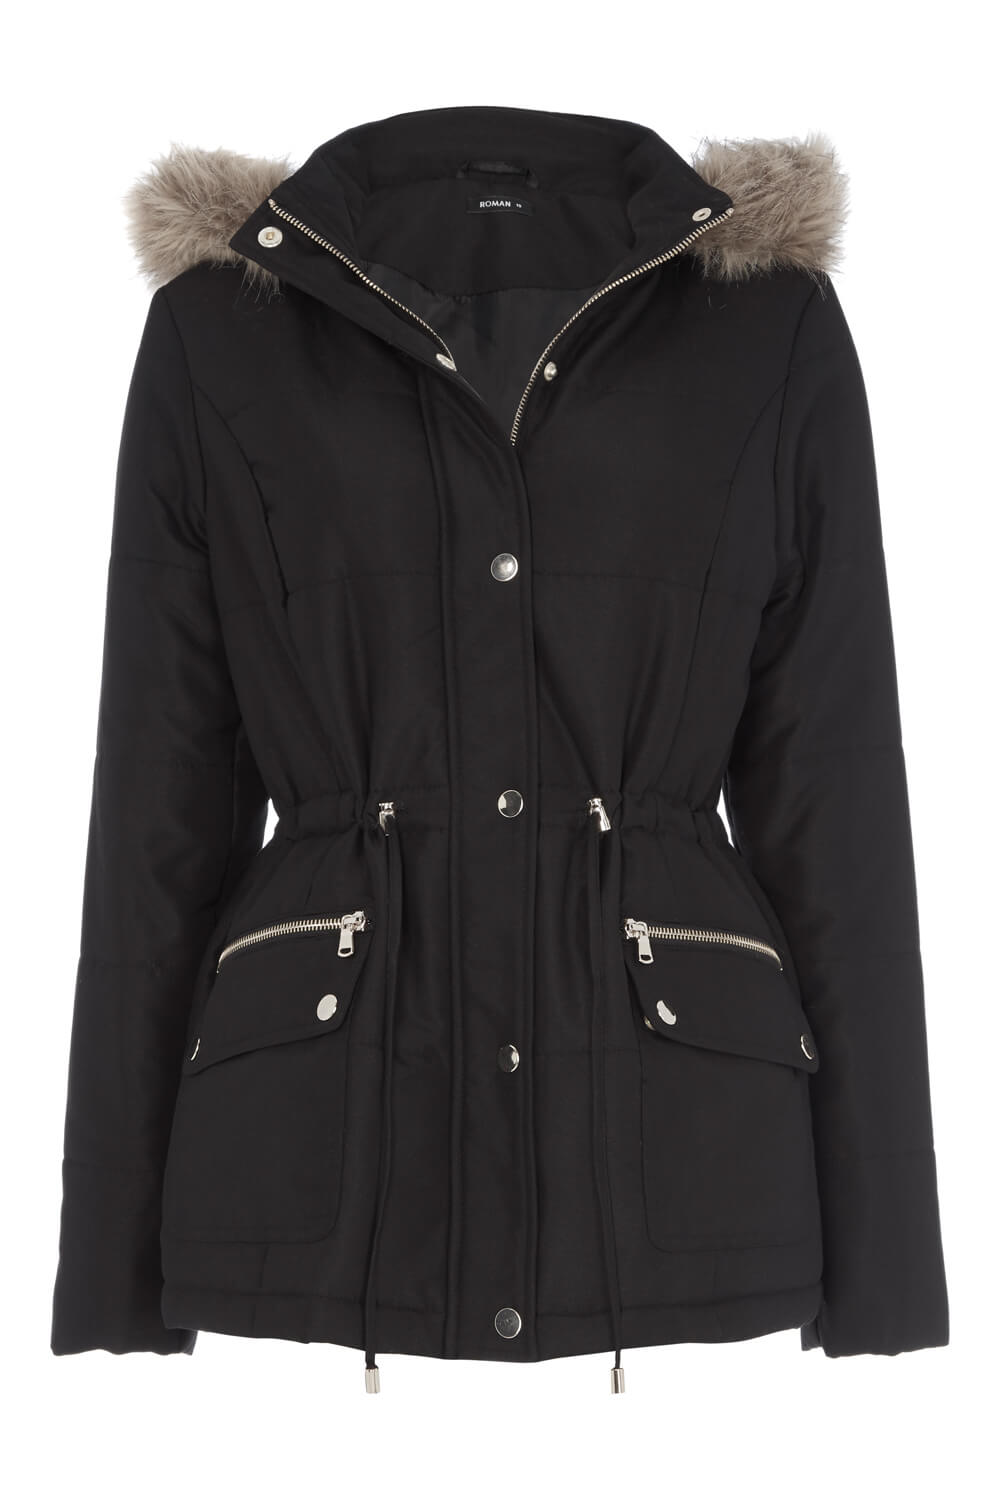 Black Short Parka Coat with Hood, Image 6 of 6